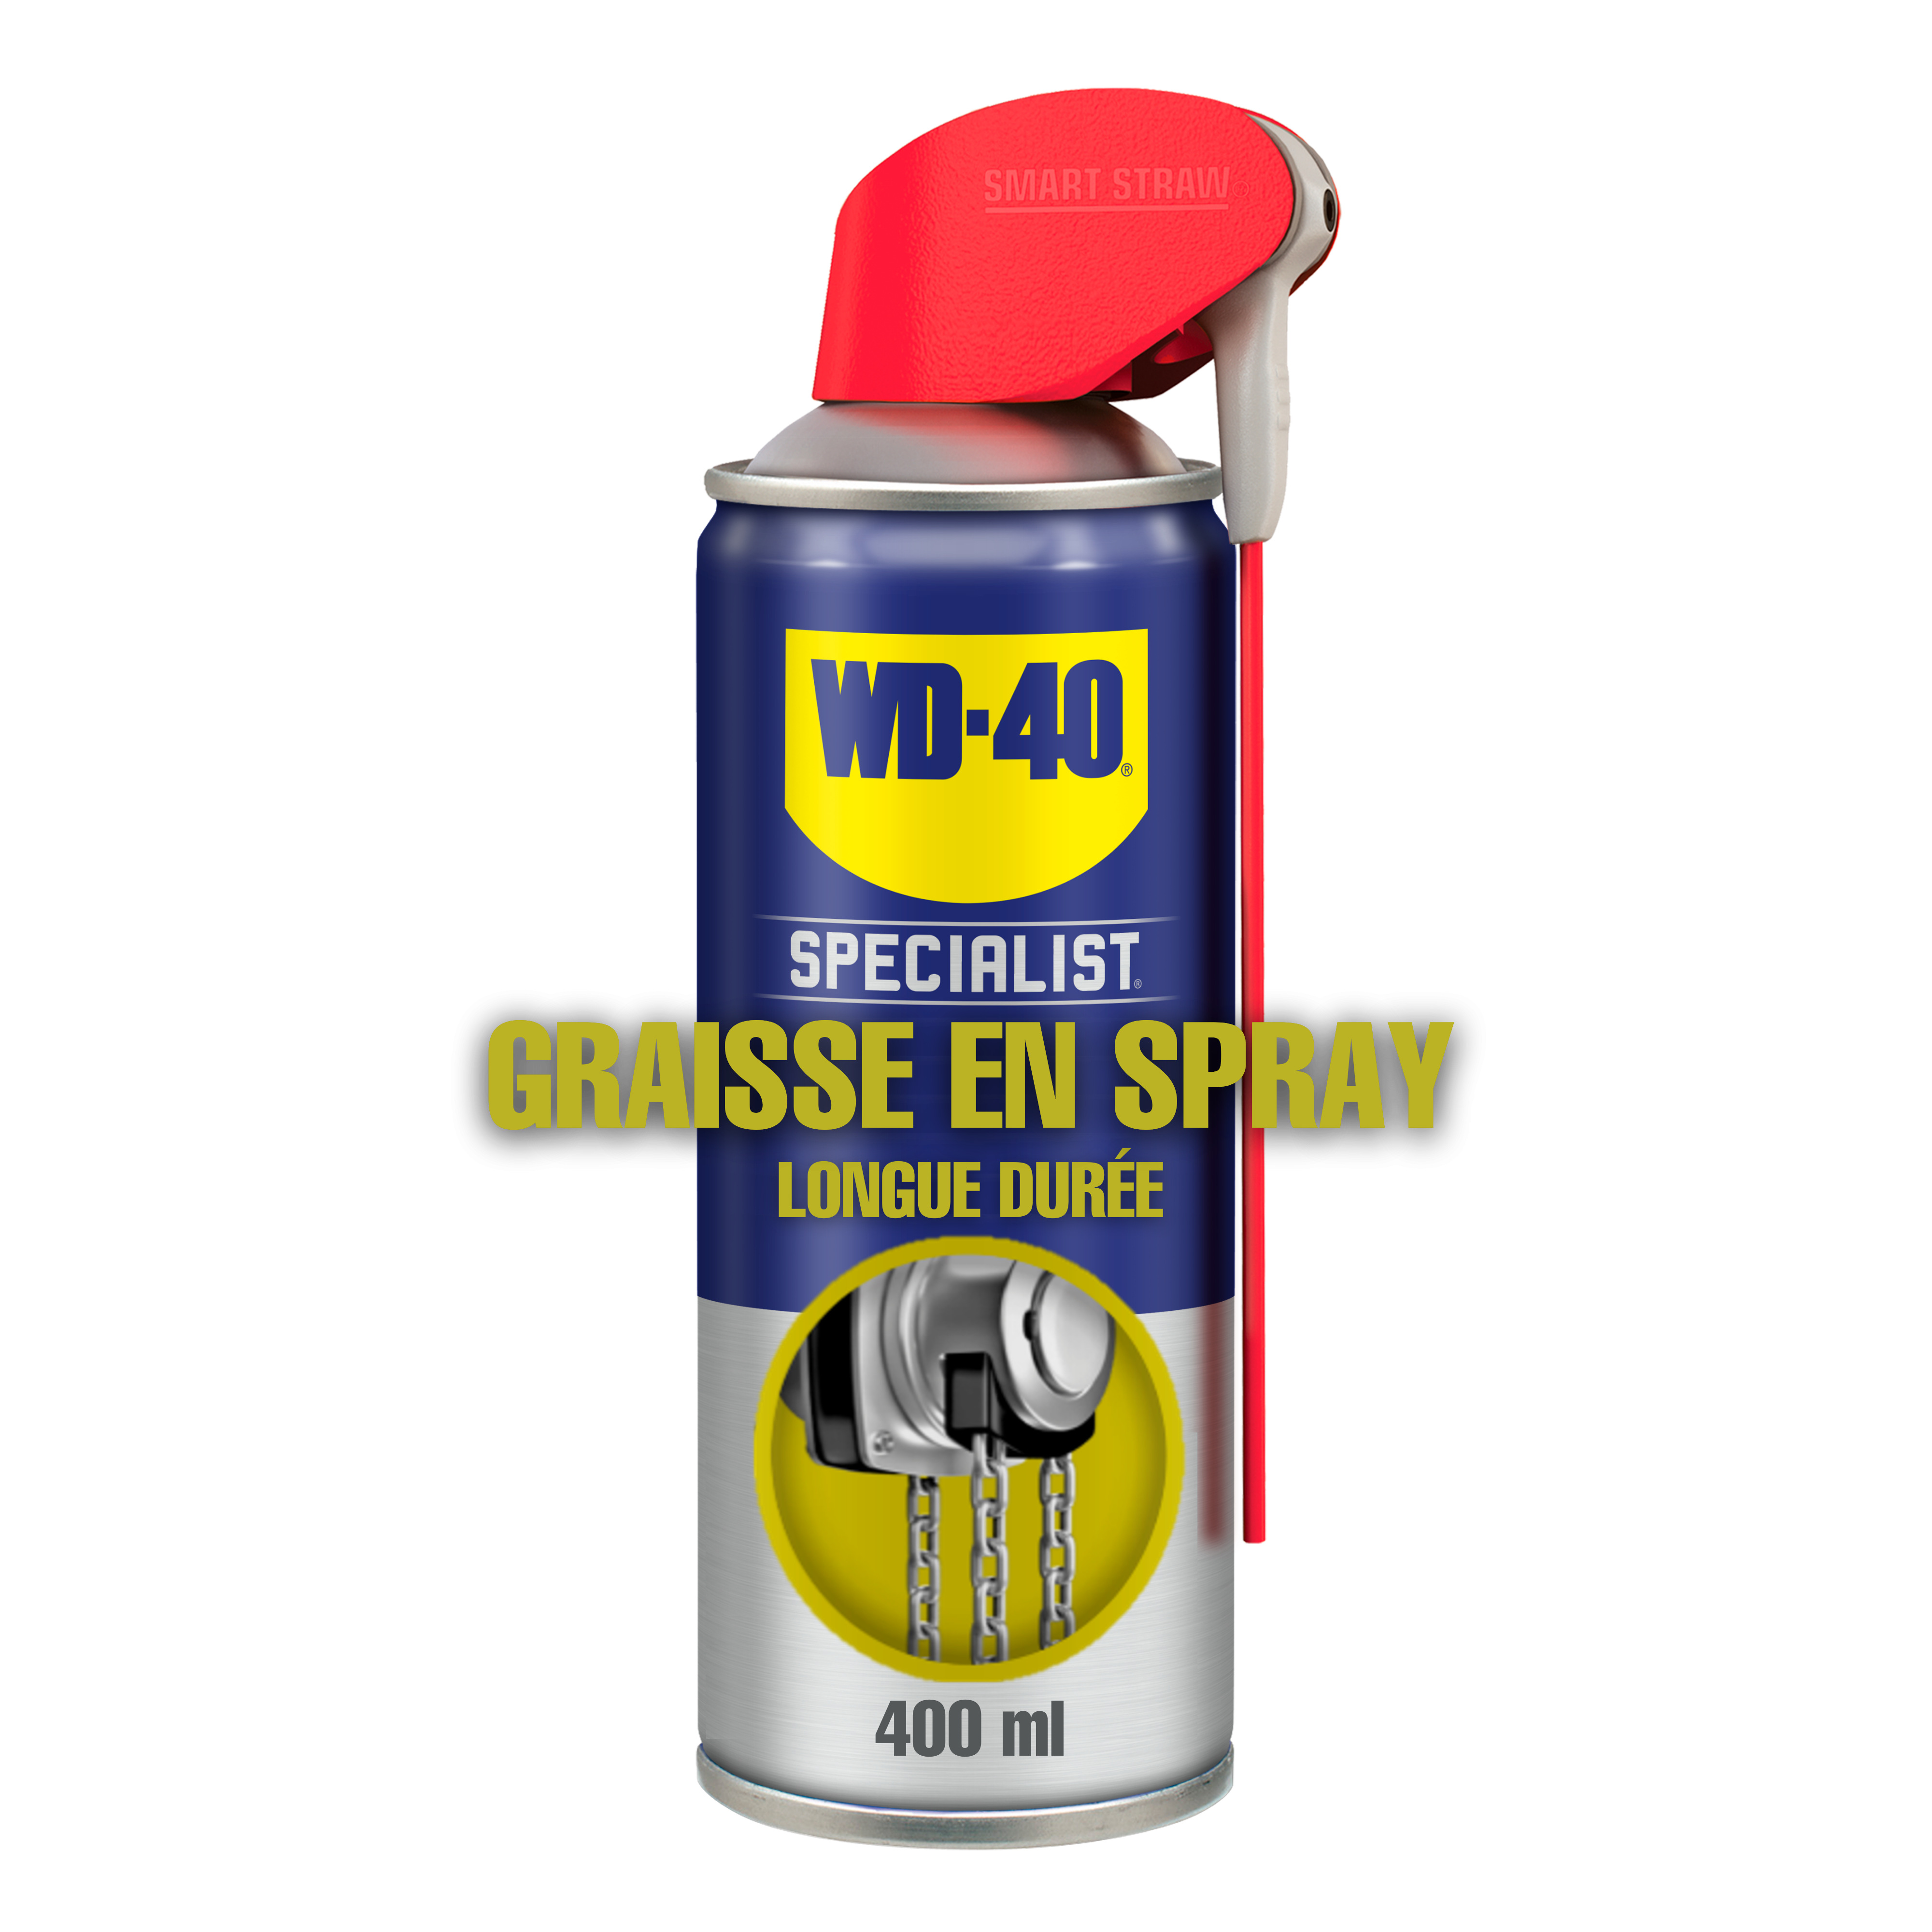 Graisse en Spray WD-40 Specialist 400 ml